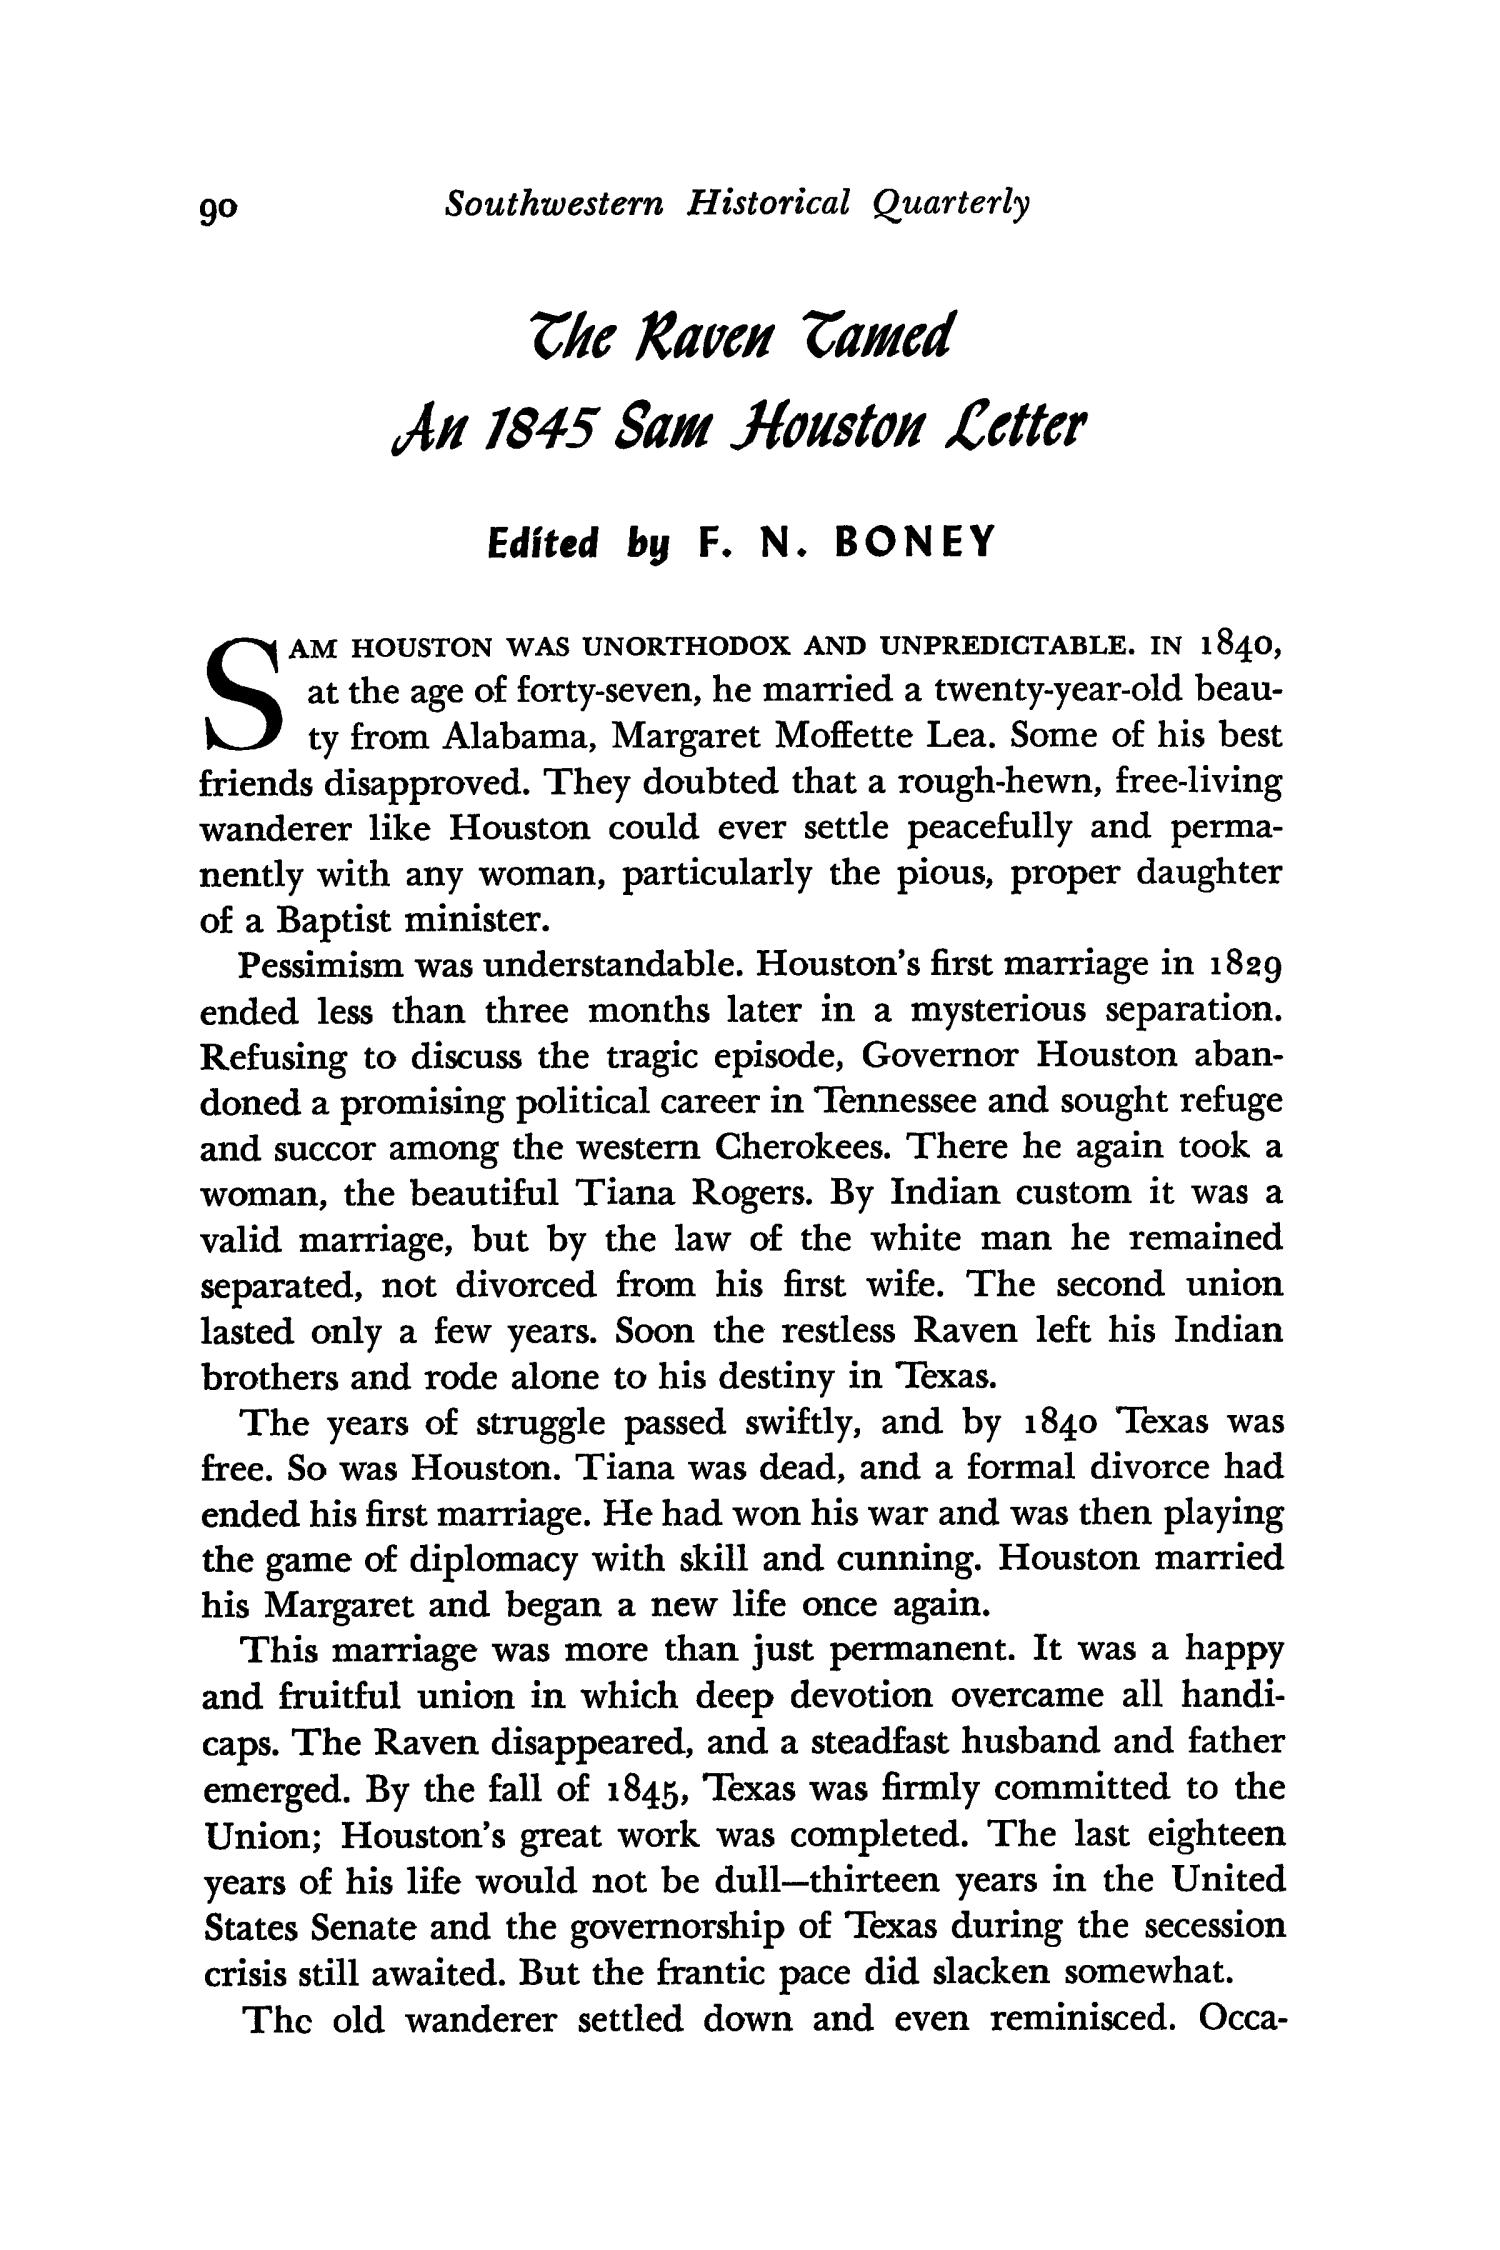 The Southwestern Historical Quarterly, Volume 68, July 1964 - April, 1965
                                                
                                                    90
                                                